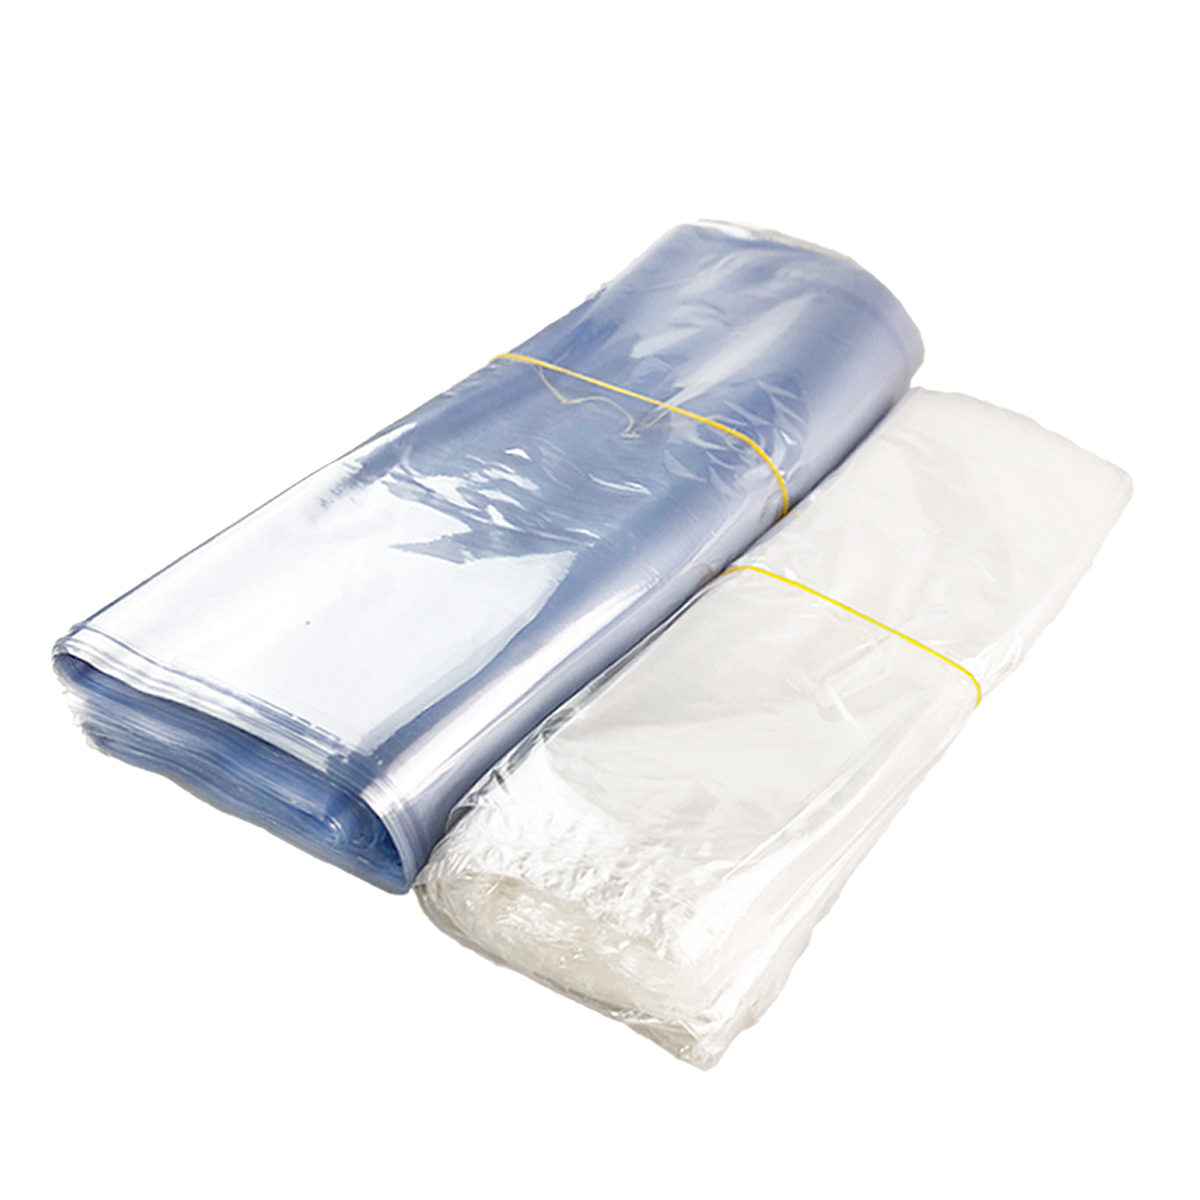 POF/PVC Shrink Wrap Bags